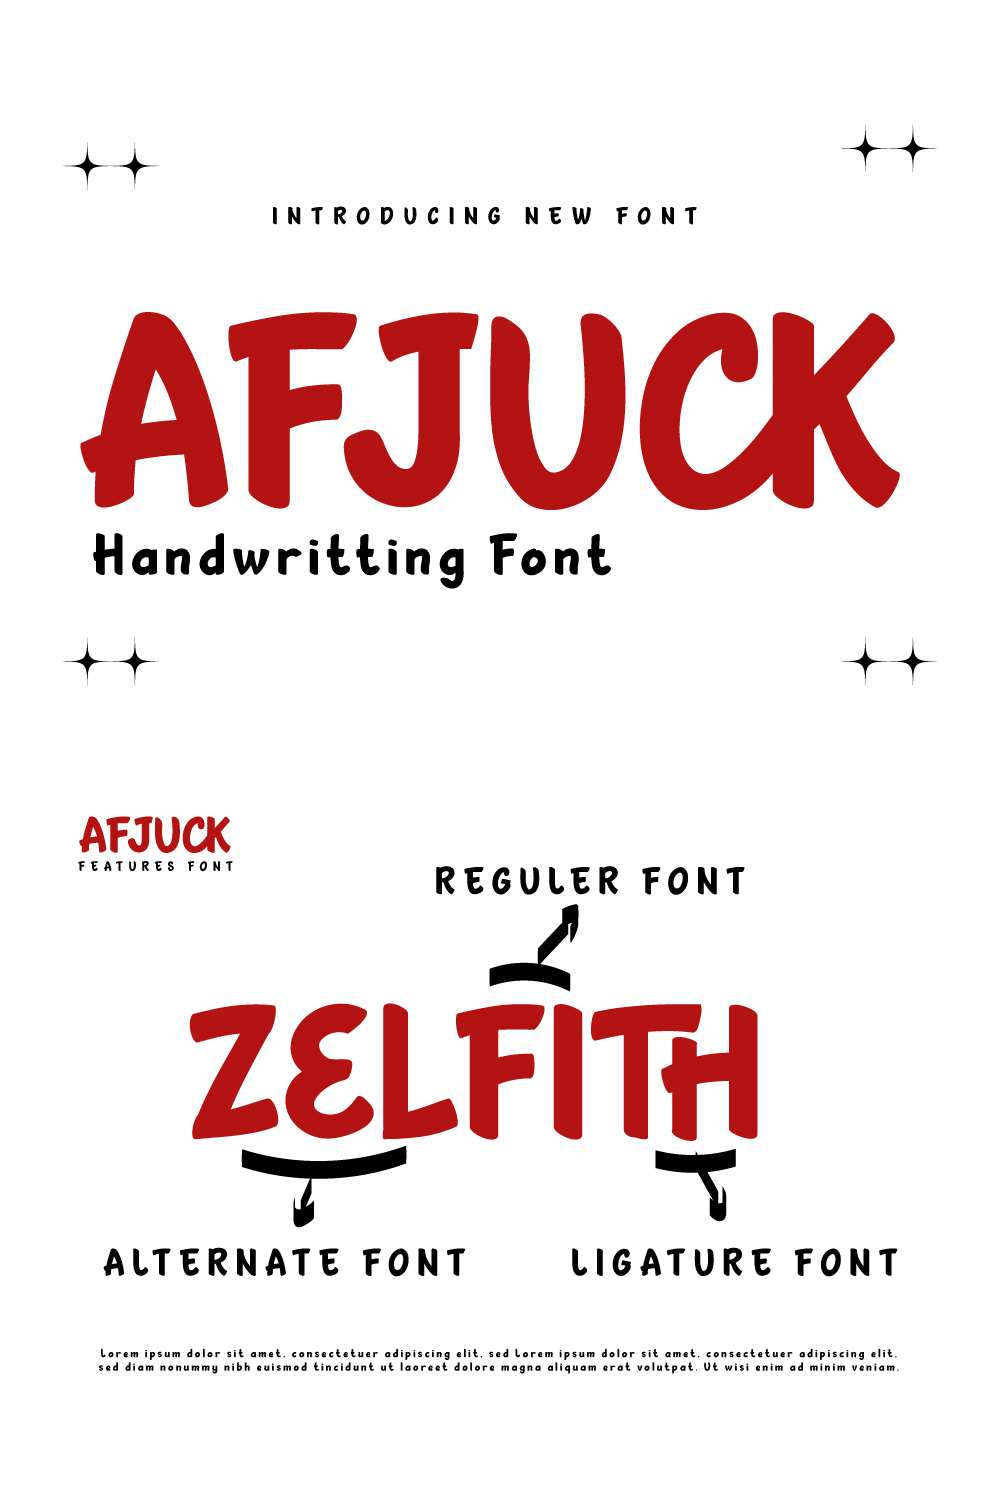 AFJUCK | Handwriting Display pinterest preview image.